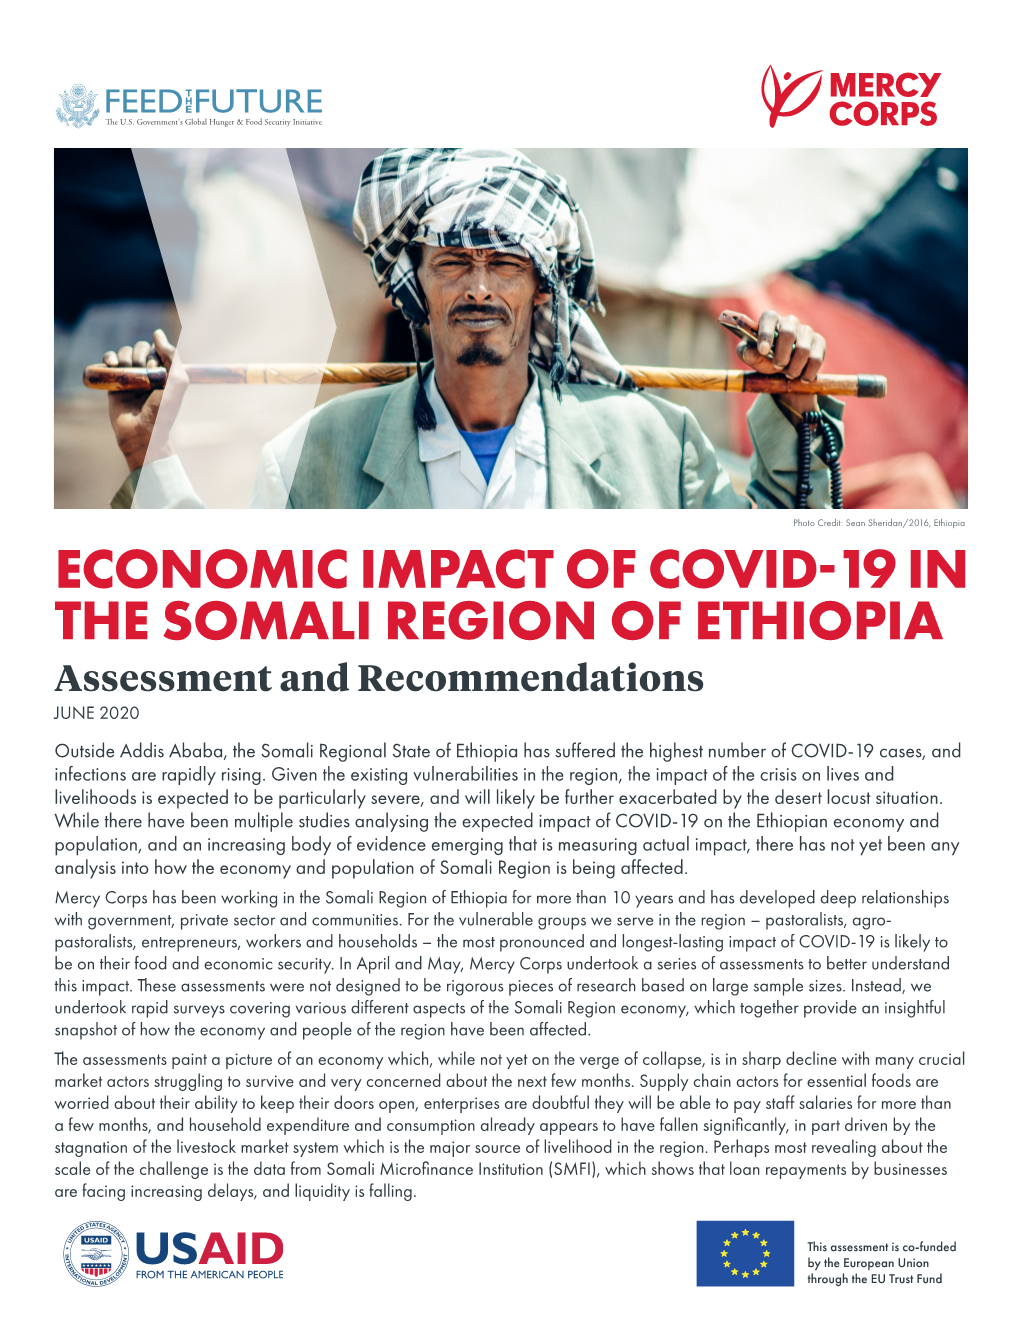 Economic Impact of Covid-19 in the Somali Region of Ethiopia